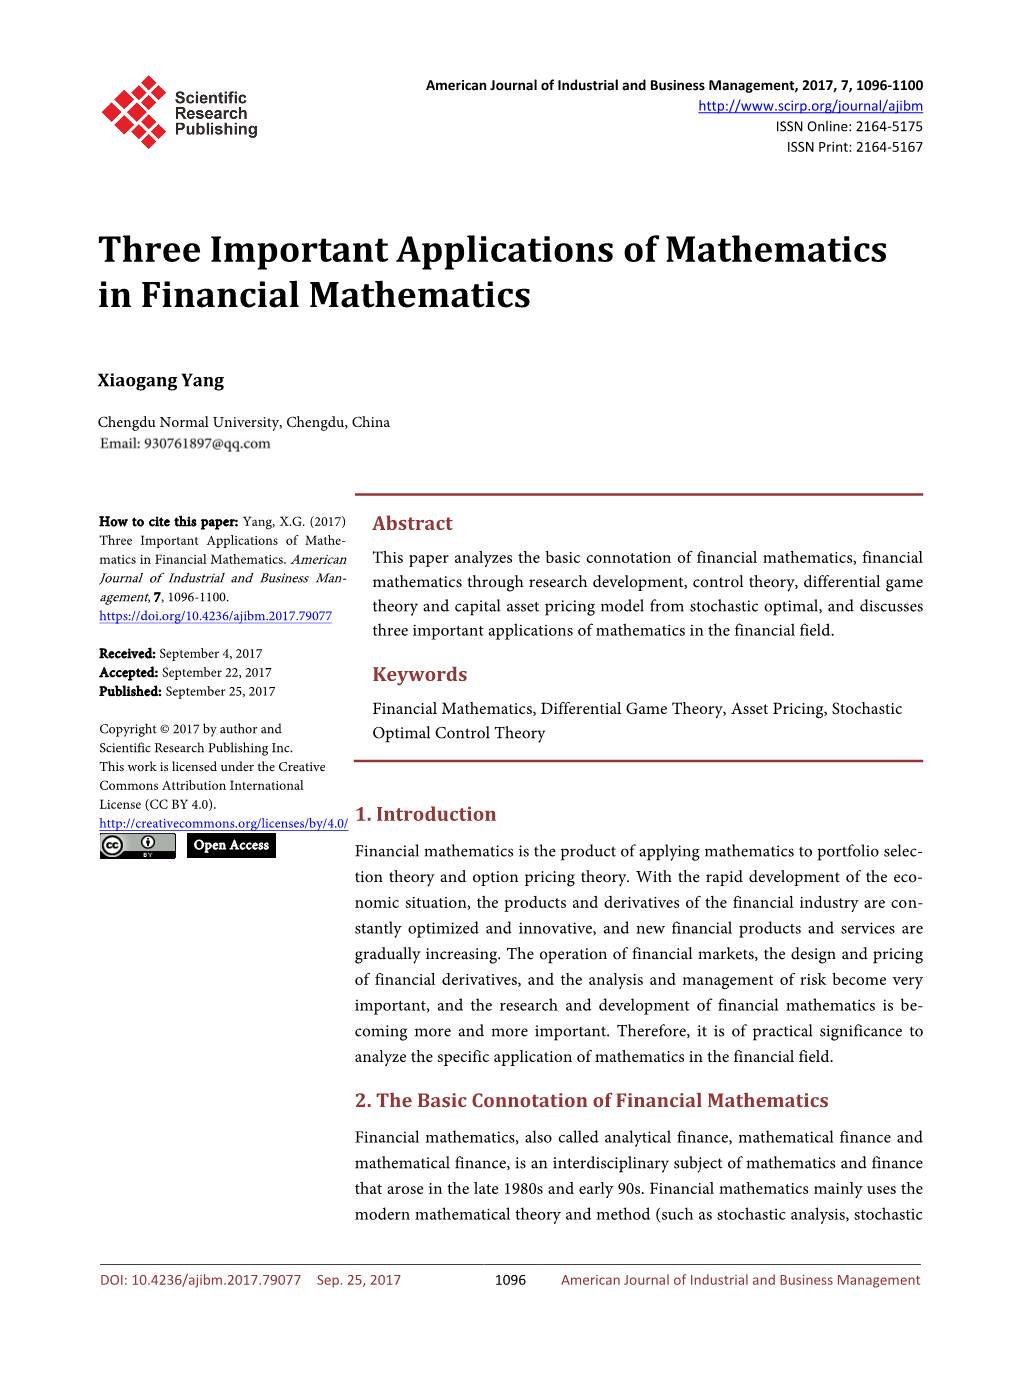 Three Important Applications of Mathematics in Financial Mathematics